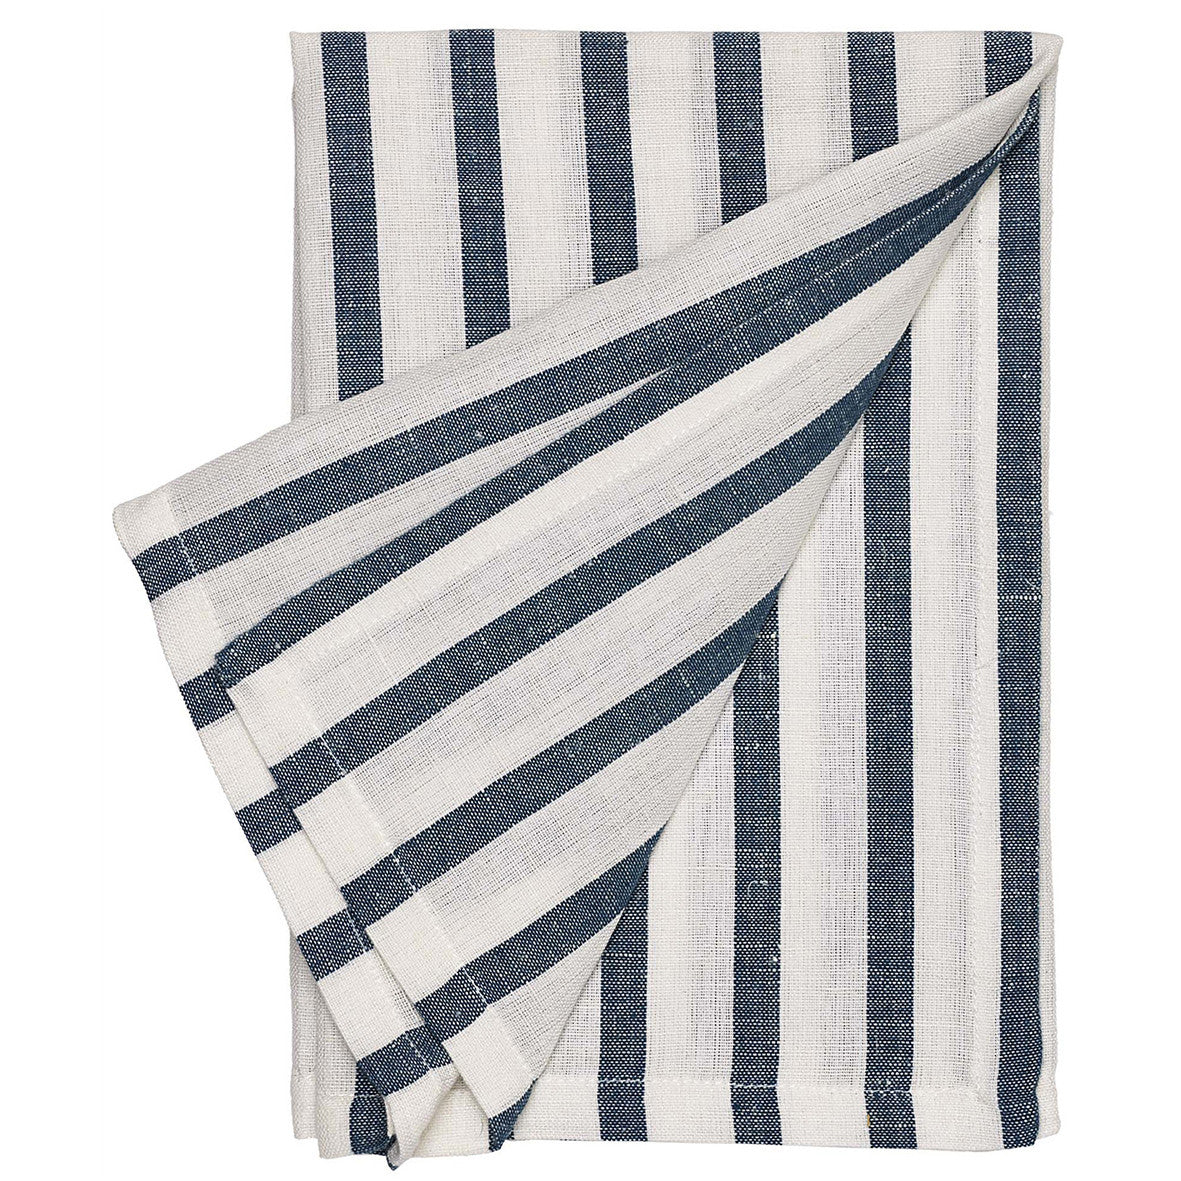 Autumn Ticking Stripe Cotton Linen Napkin in Navy Blue